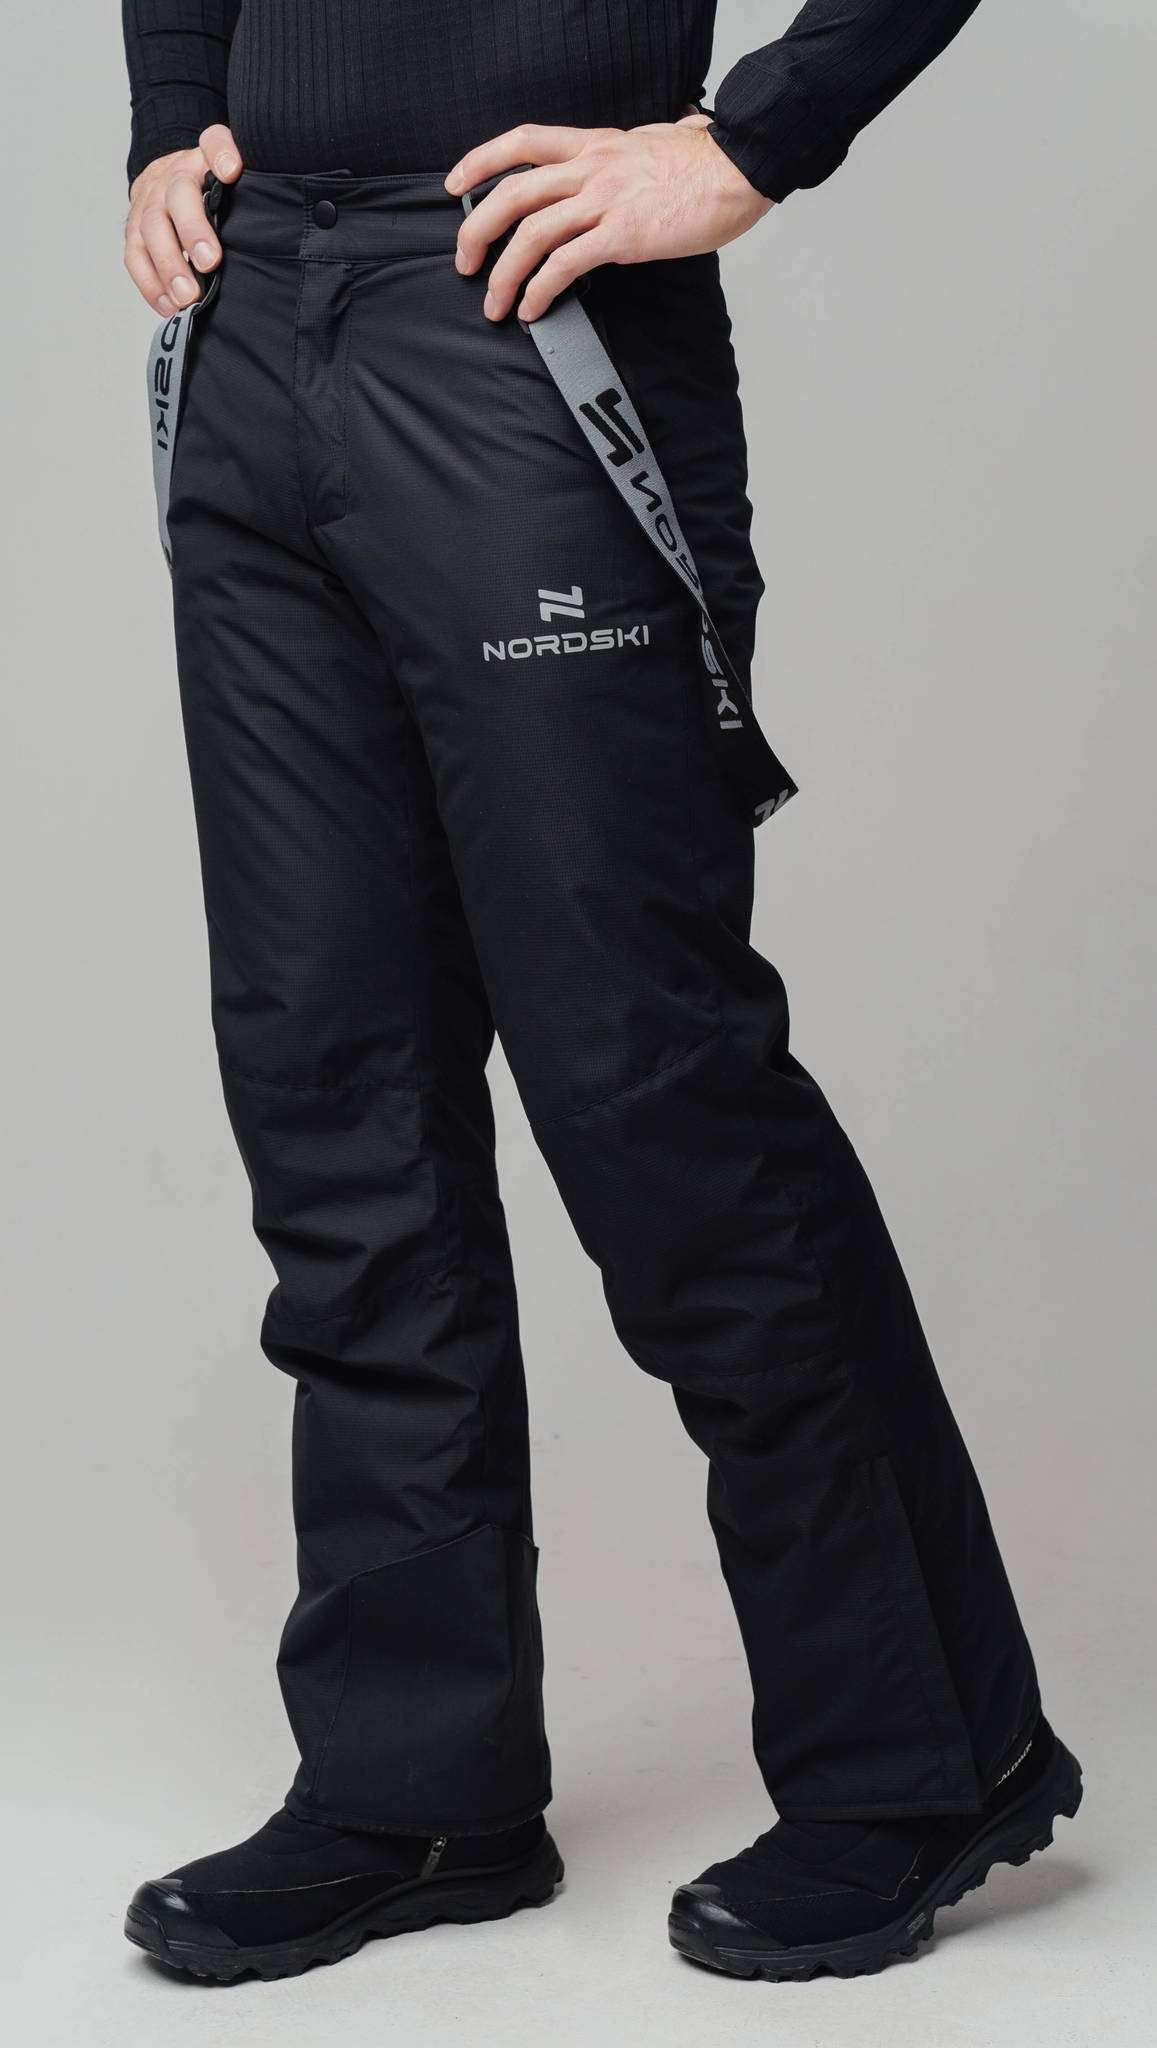 Nordski Extreme горнолыжный костюм мужской lime - 15